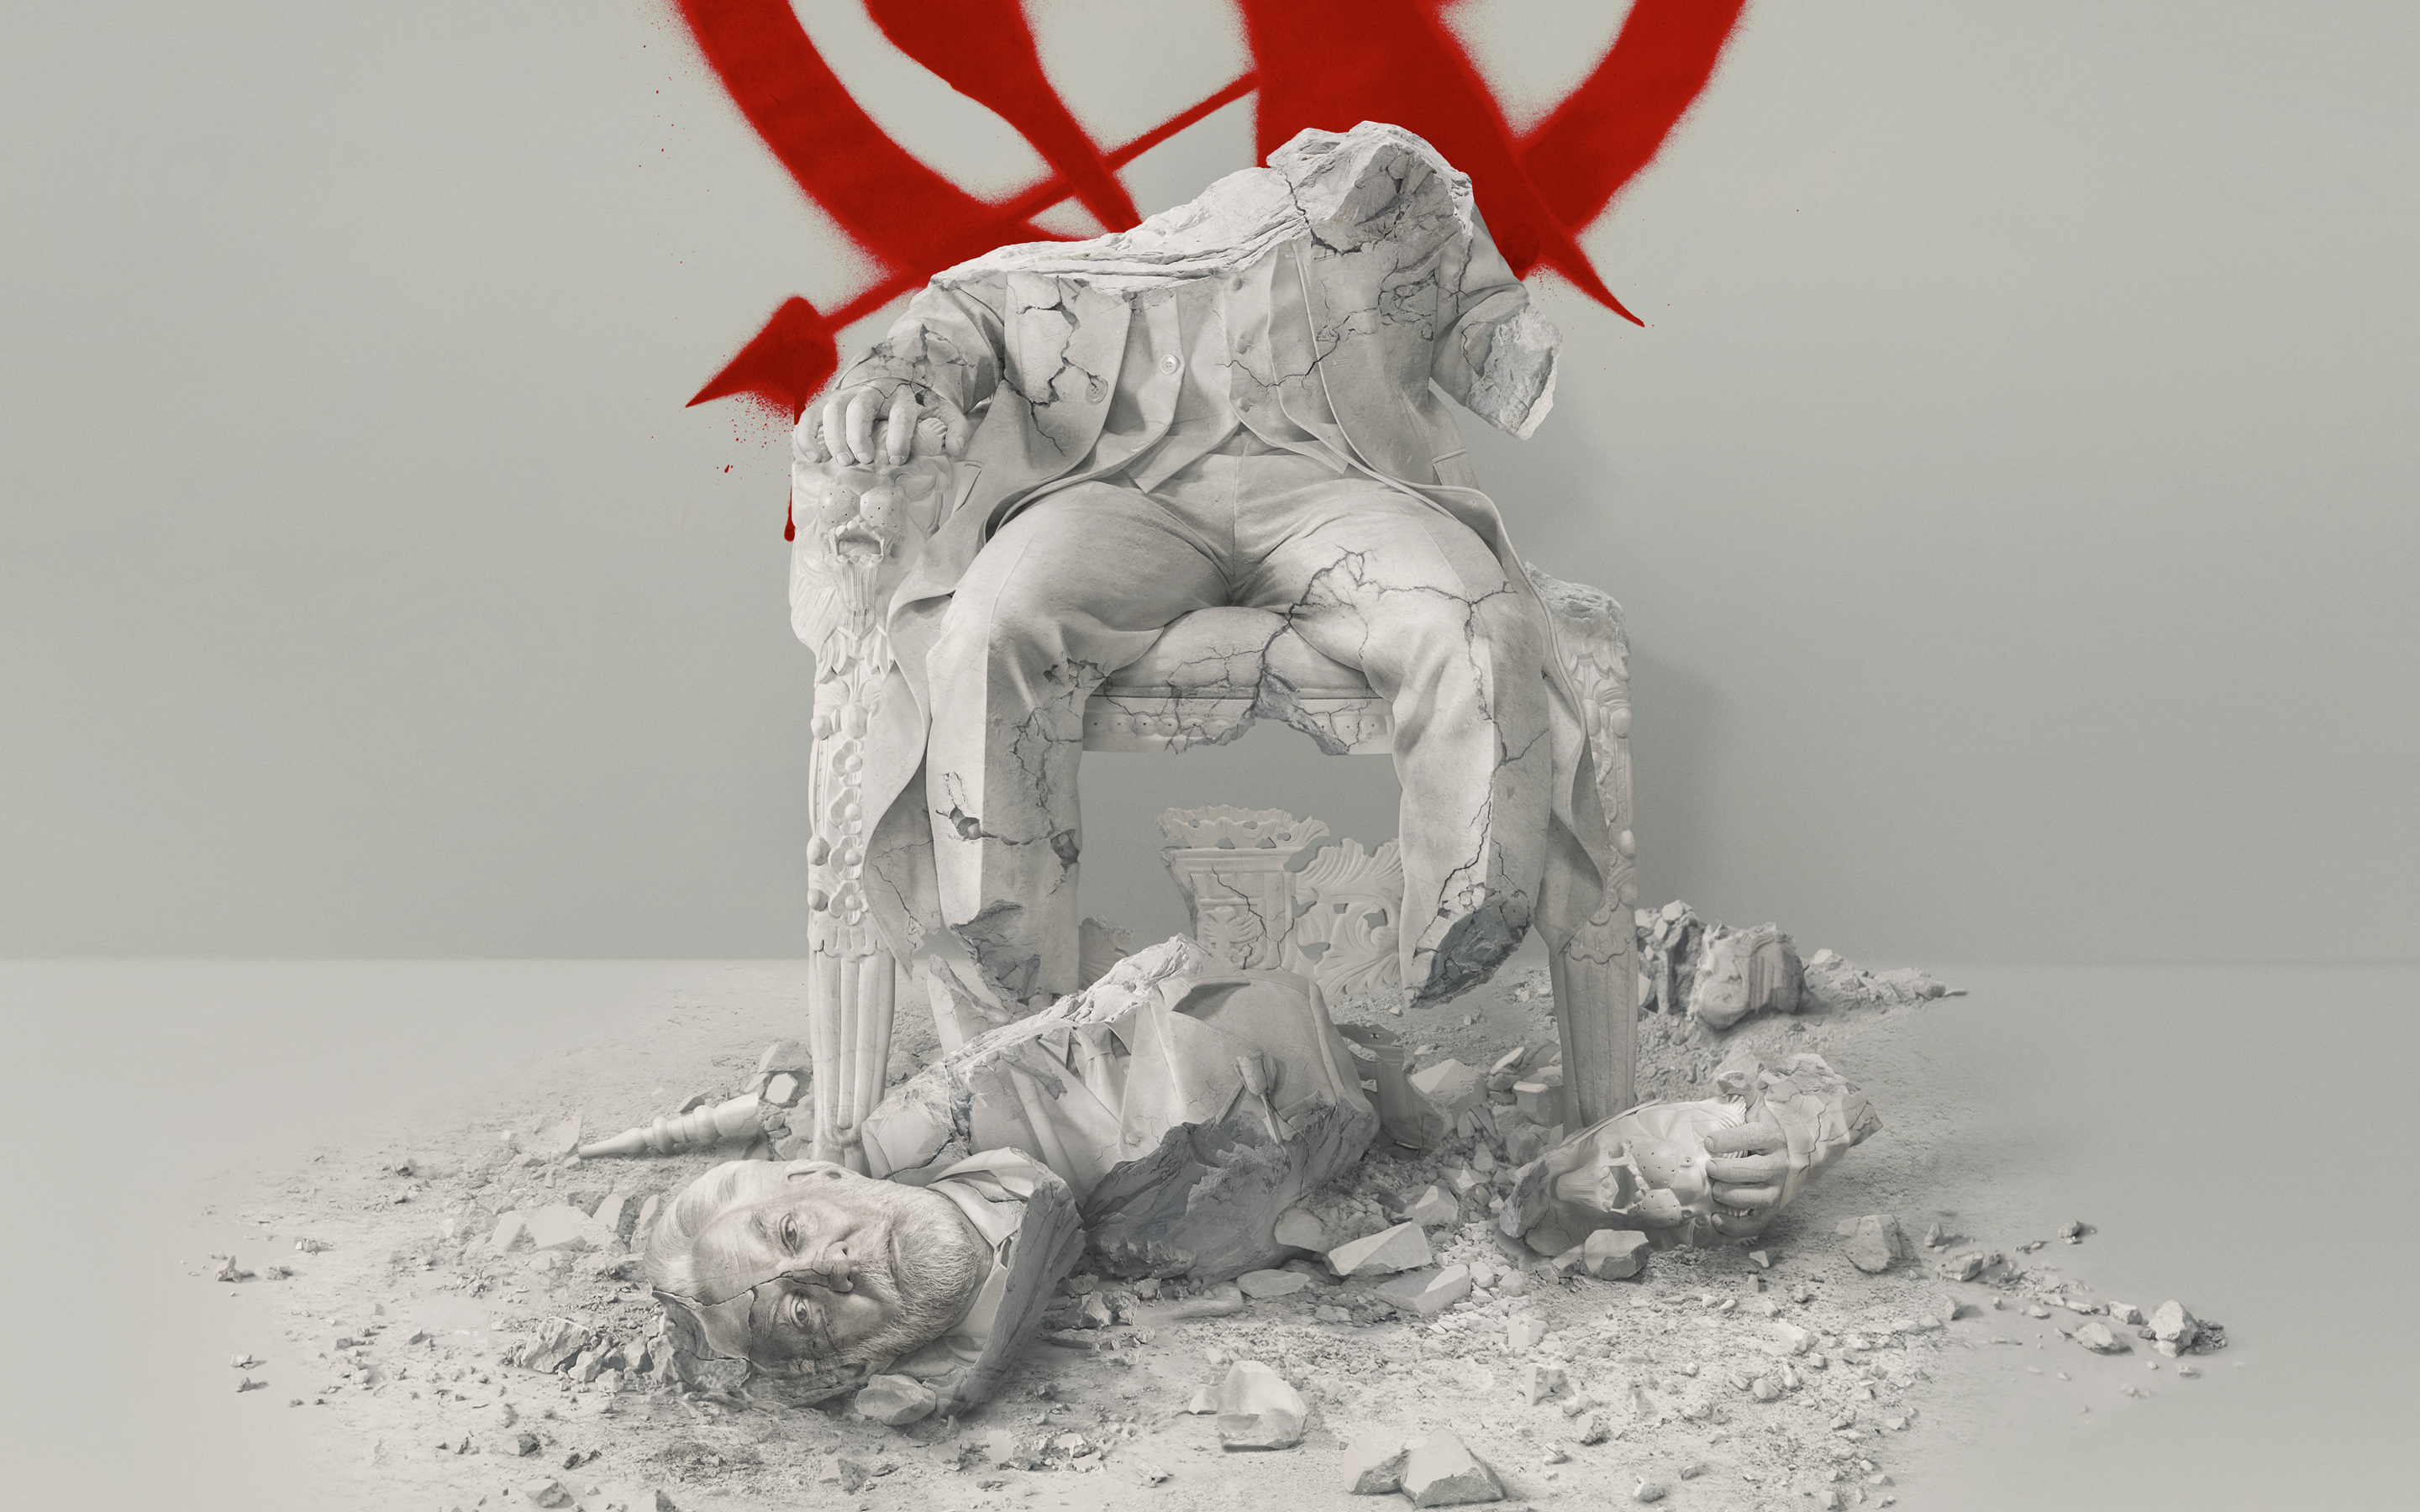 Hunger Games Mockingjay Part 2 2015 Wallpaper